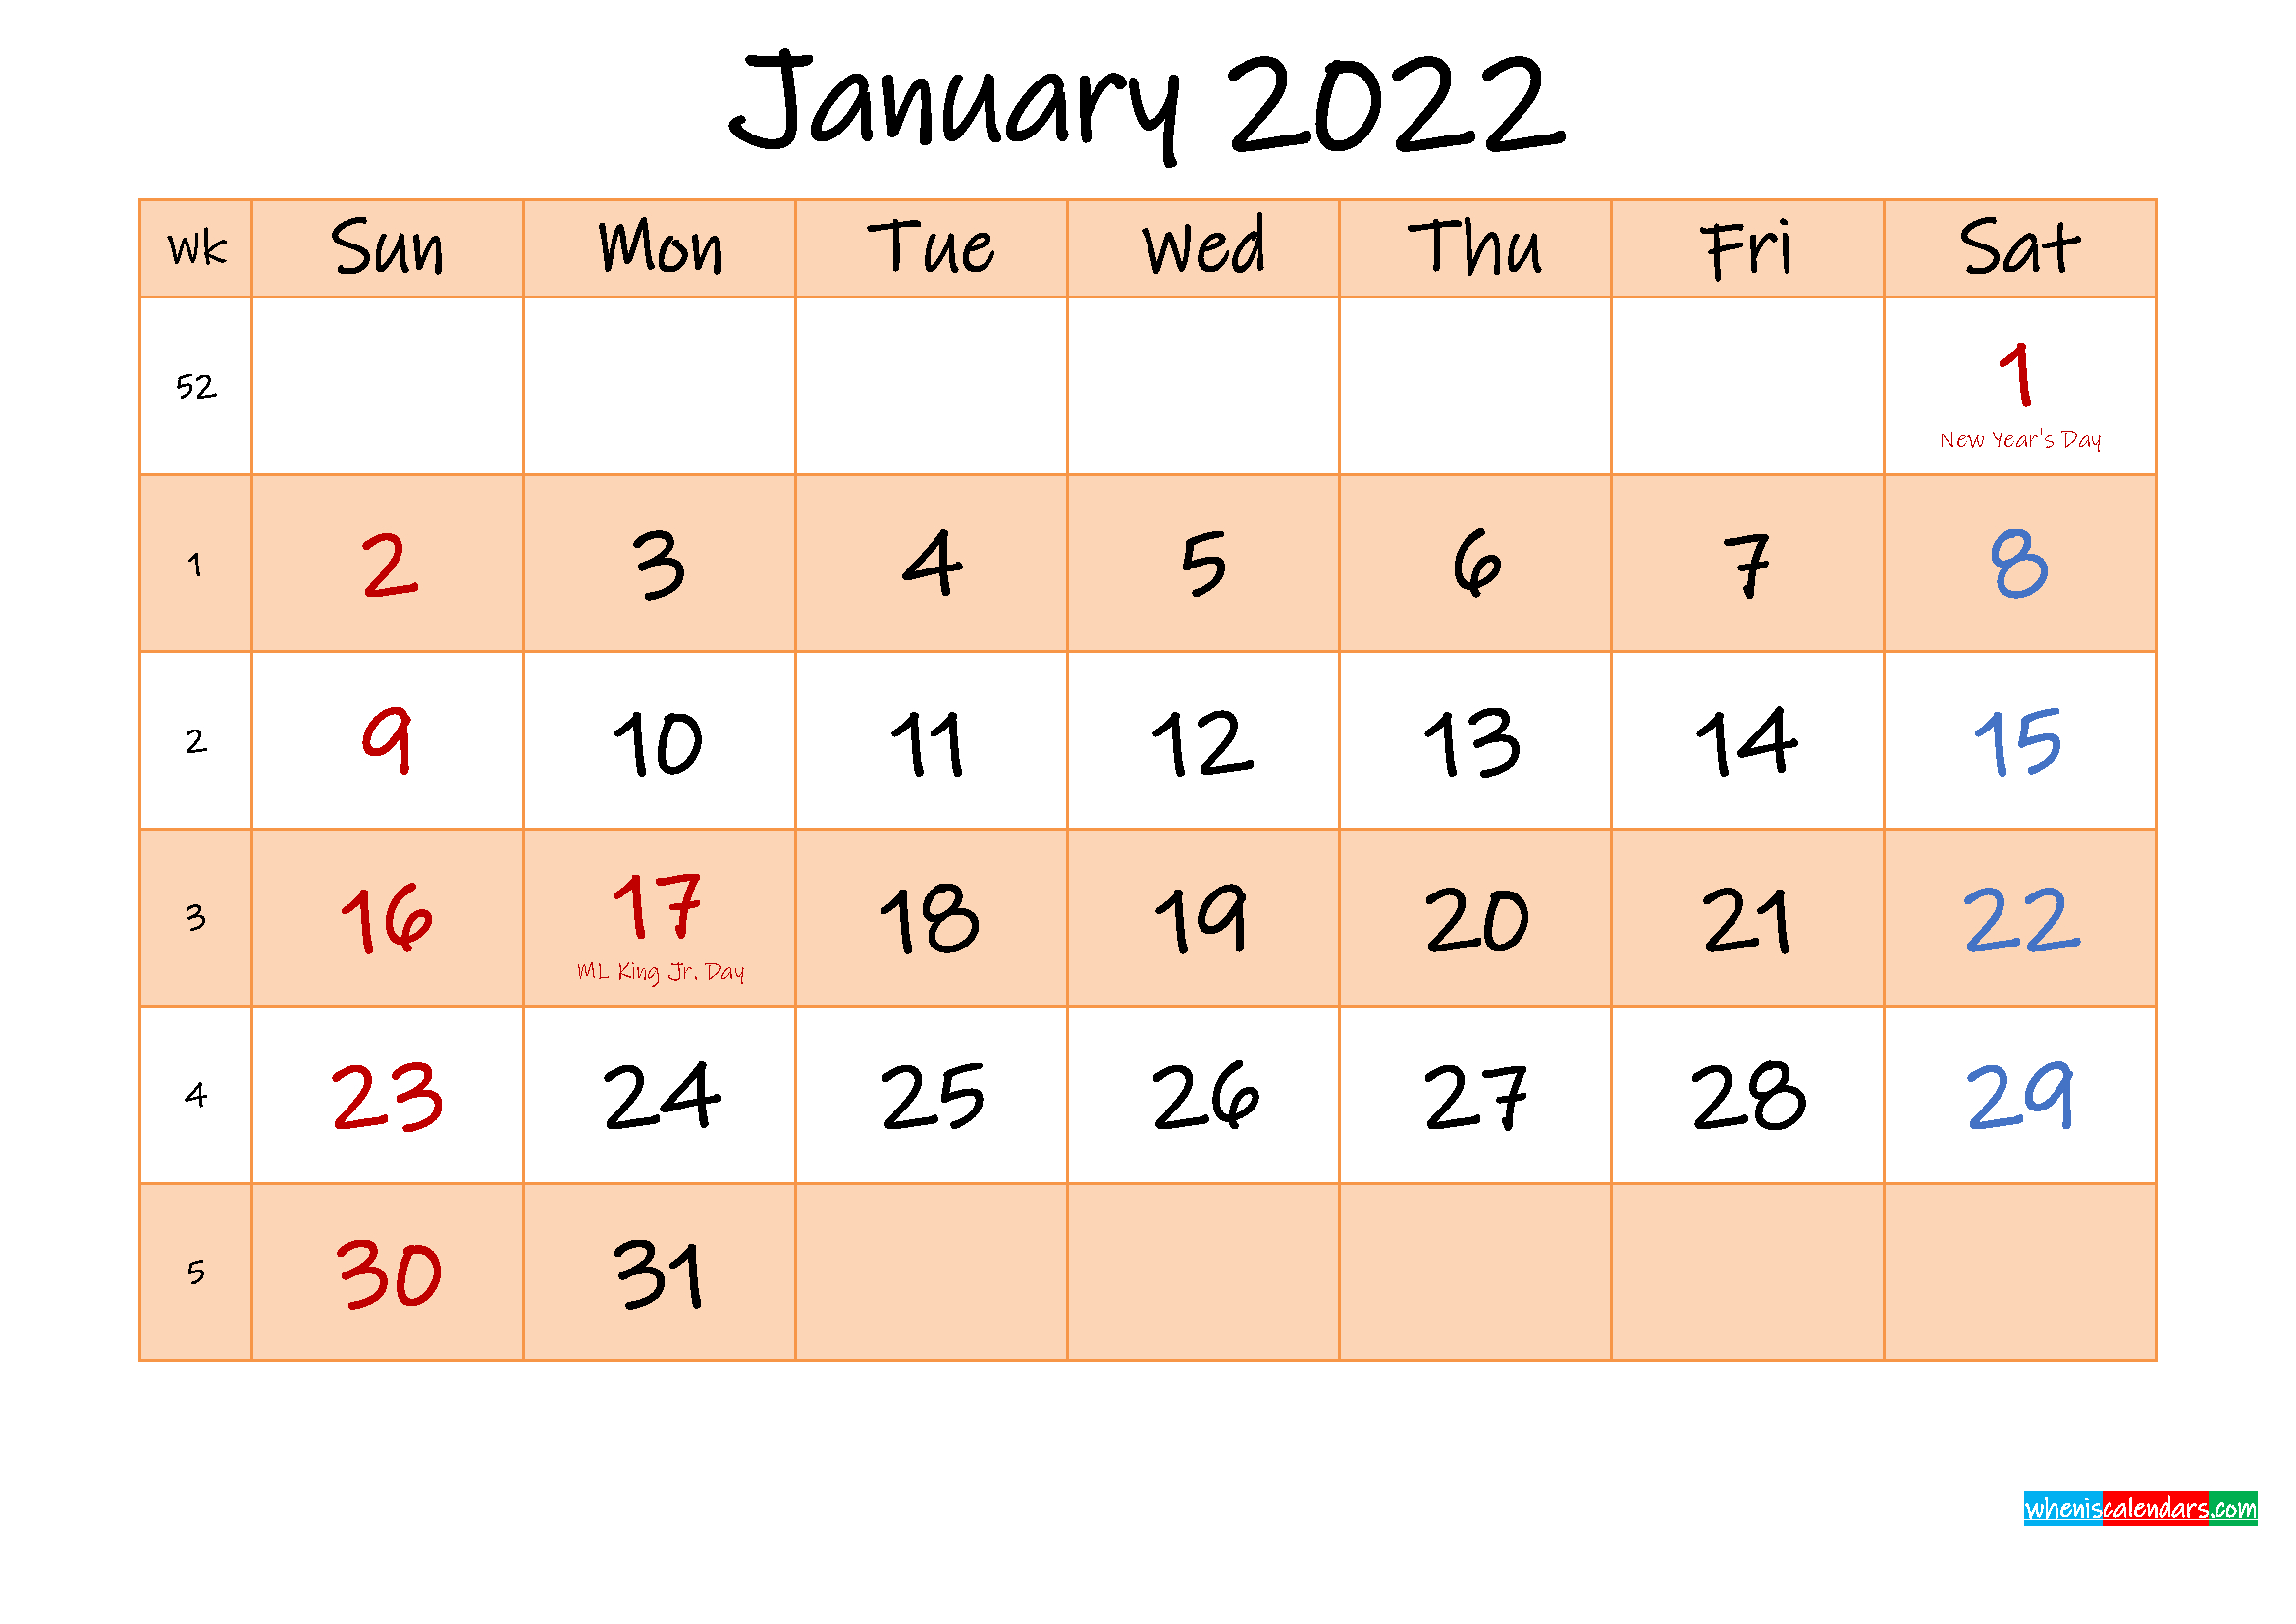 Pick January 2022 Calendar With Us Holidays